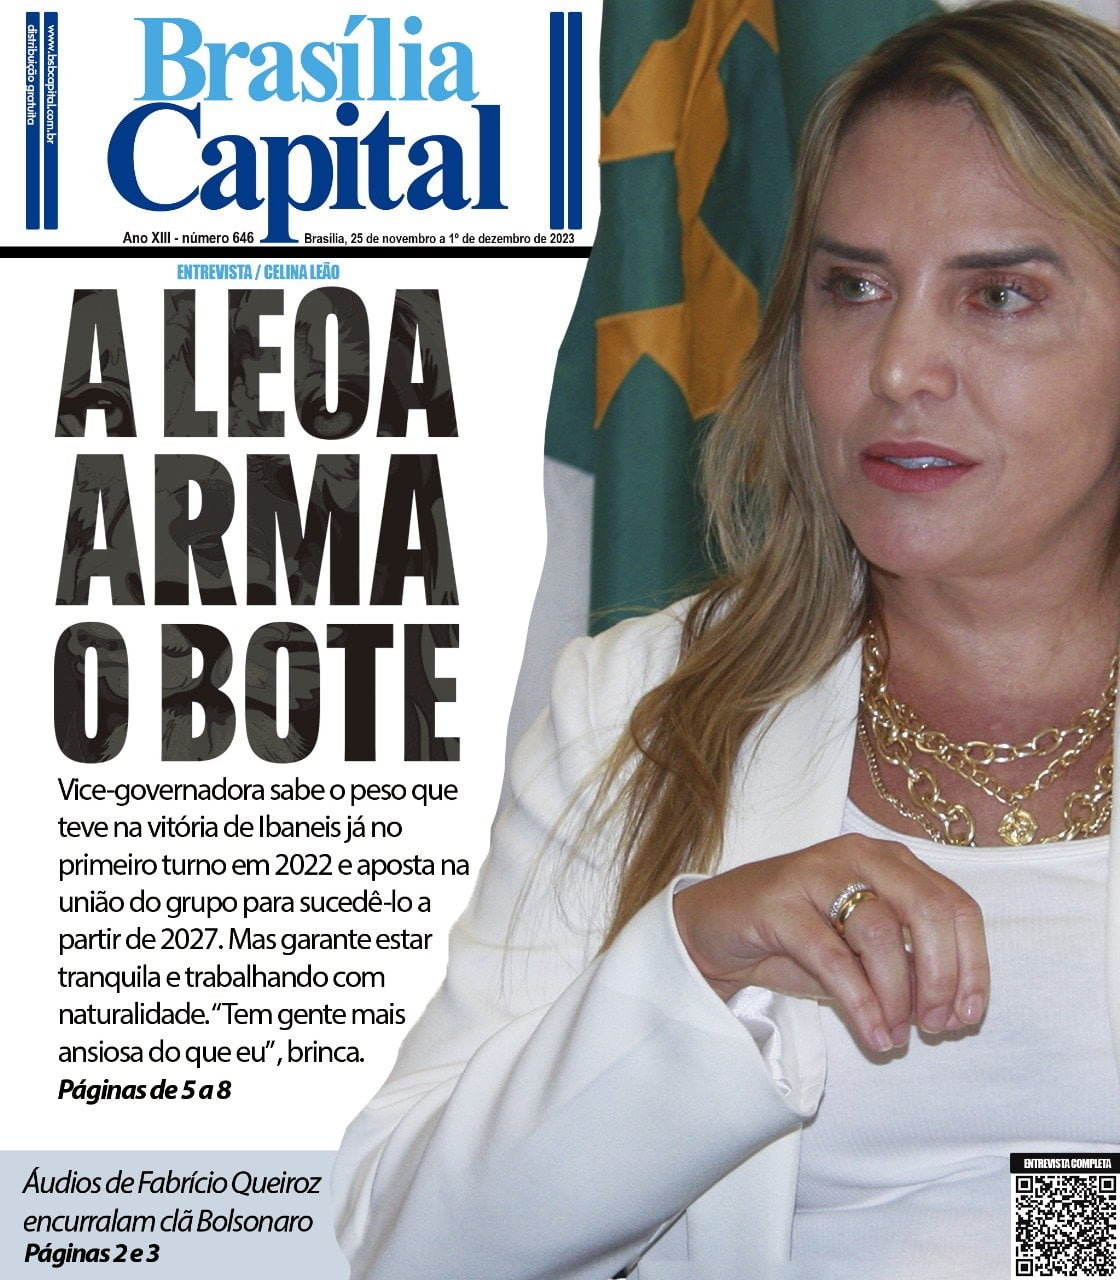 Jornal Brasília Capital 646